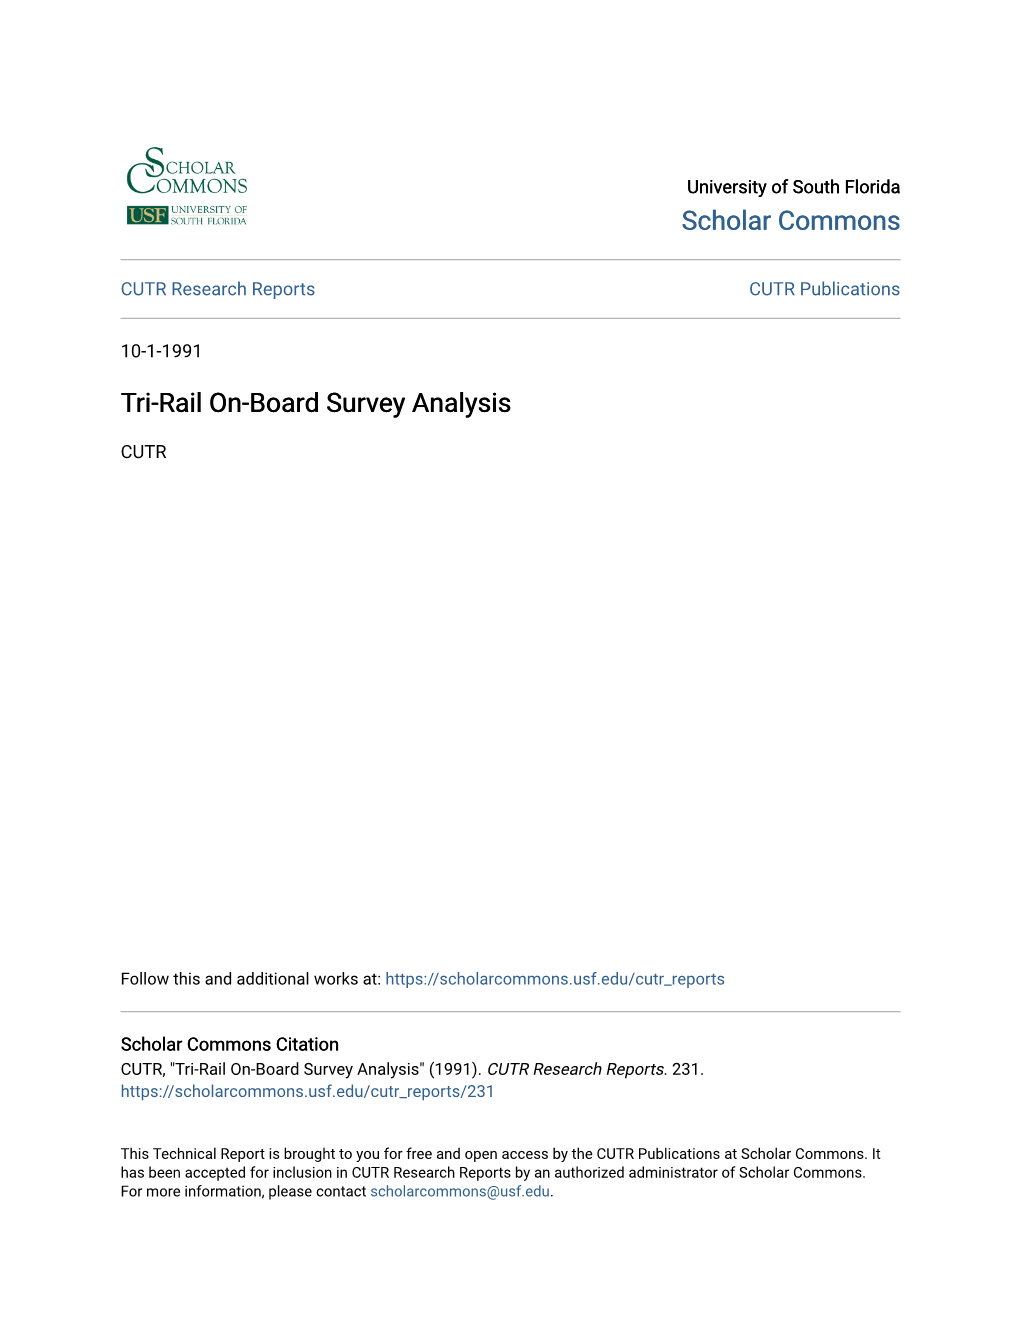 Tri-Rail On-Board Survey Analysis